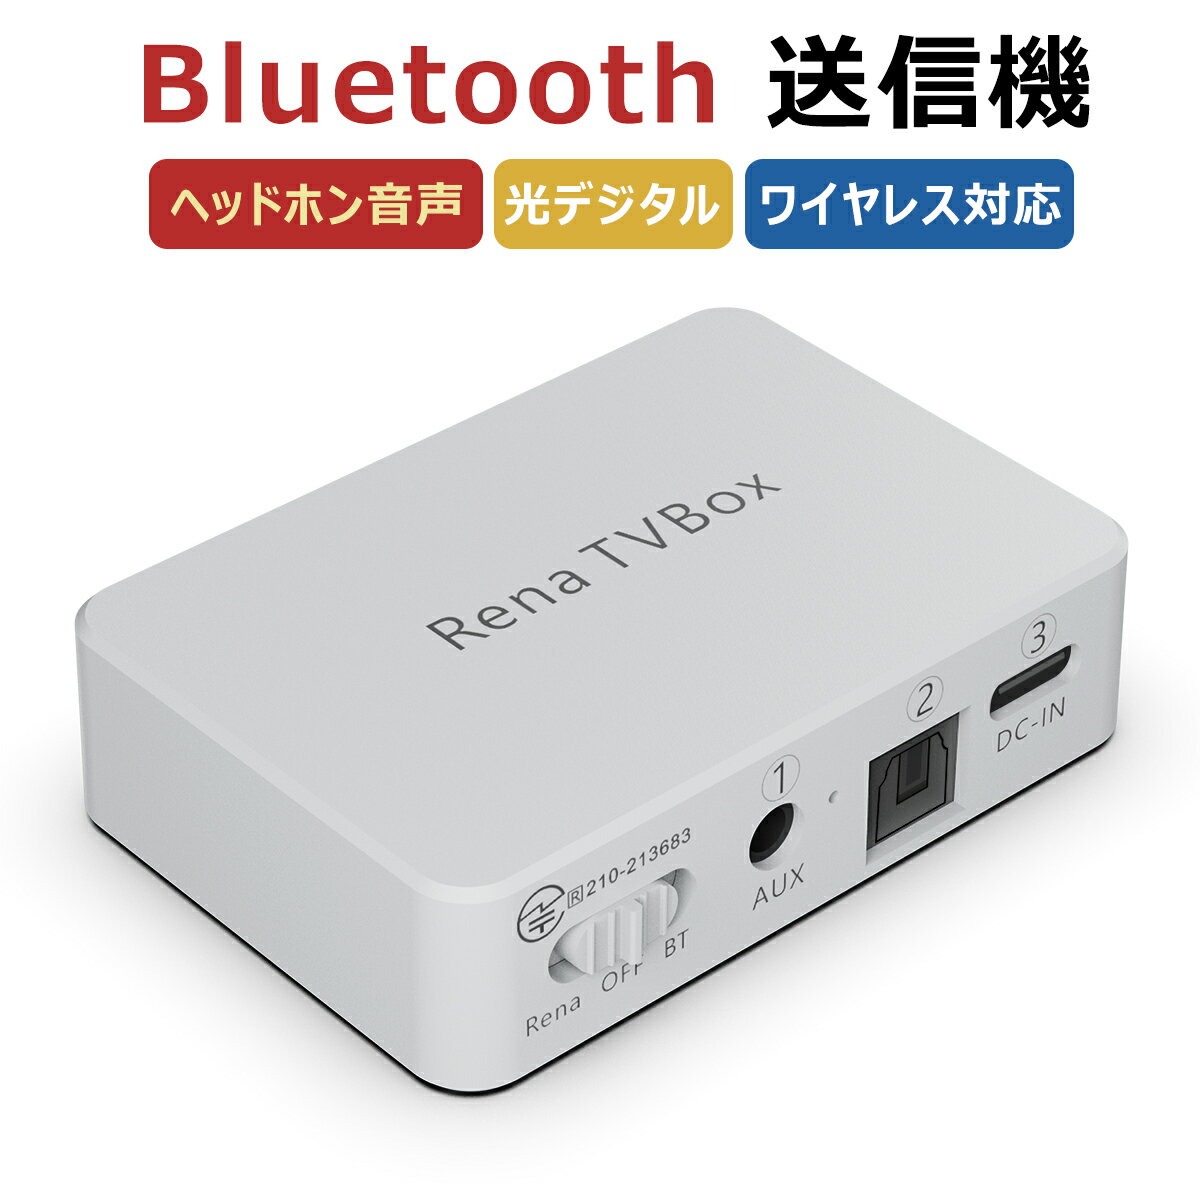 Bluetooth 送信機 bluetooth トランスミッター Bluetooth 光デジタル及びAUXヘッドホン音声デバイスには対応 bluetoo…